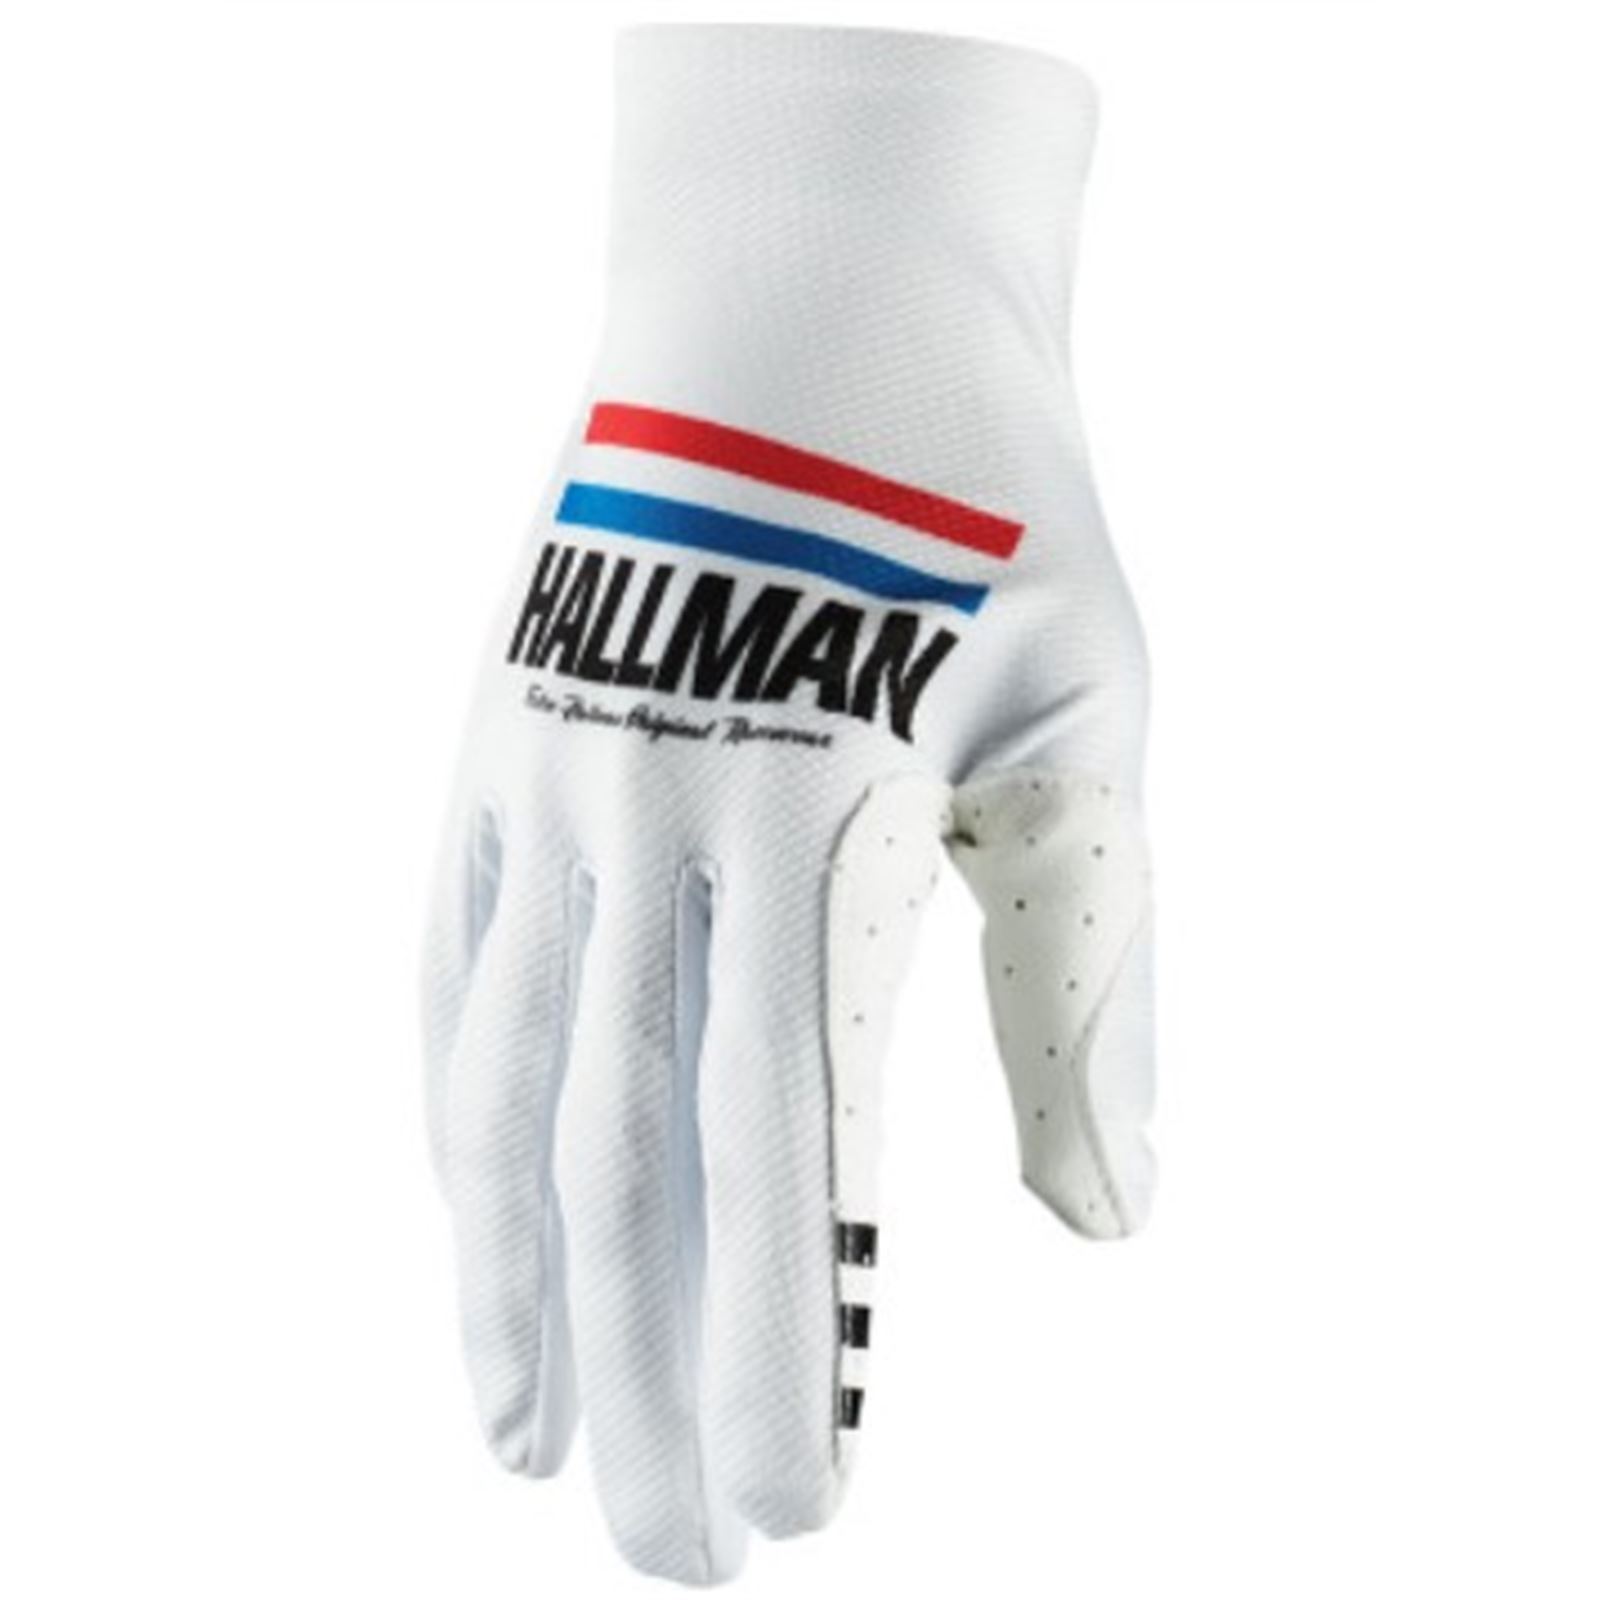 Thor Hallman Mainstay Gloves - White - Small